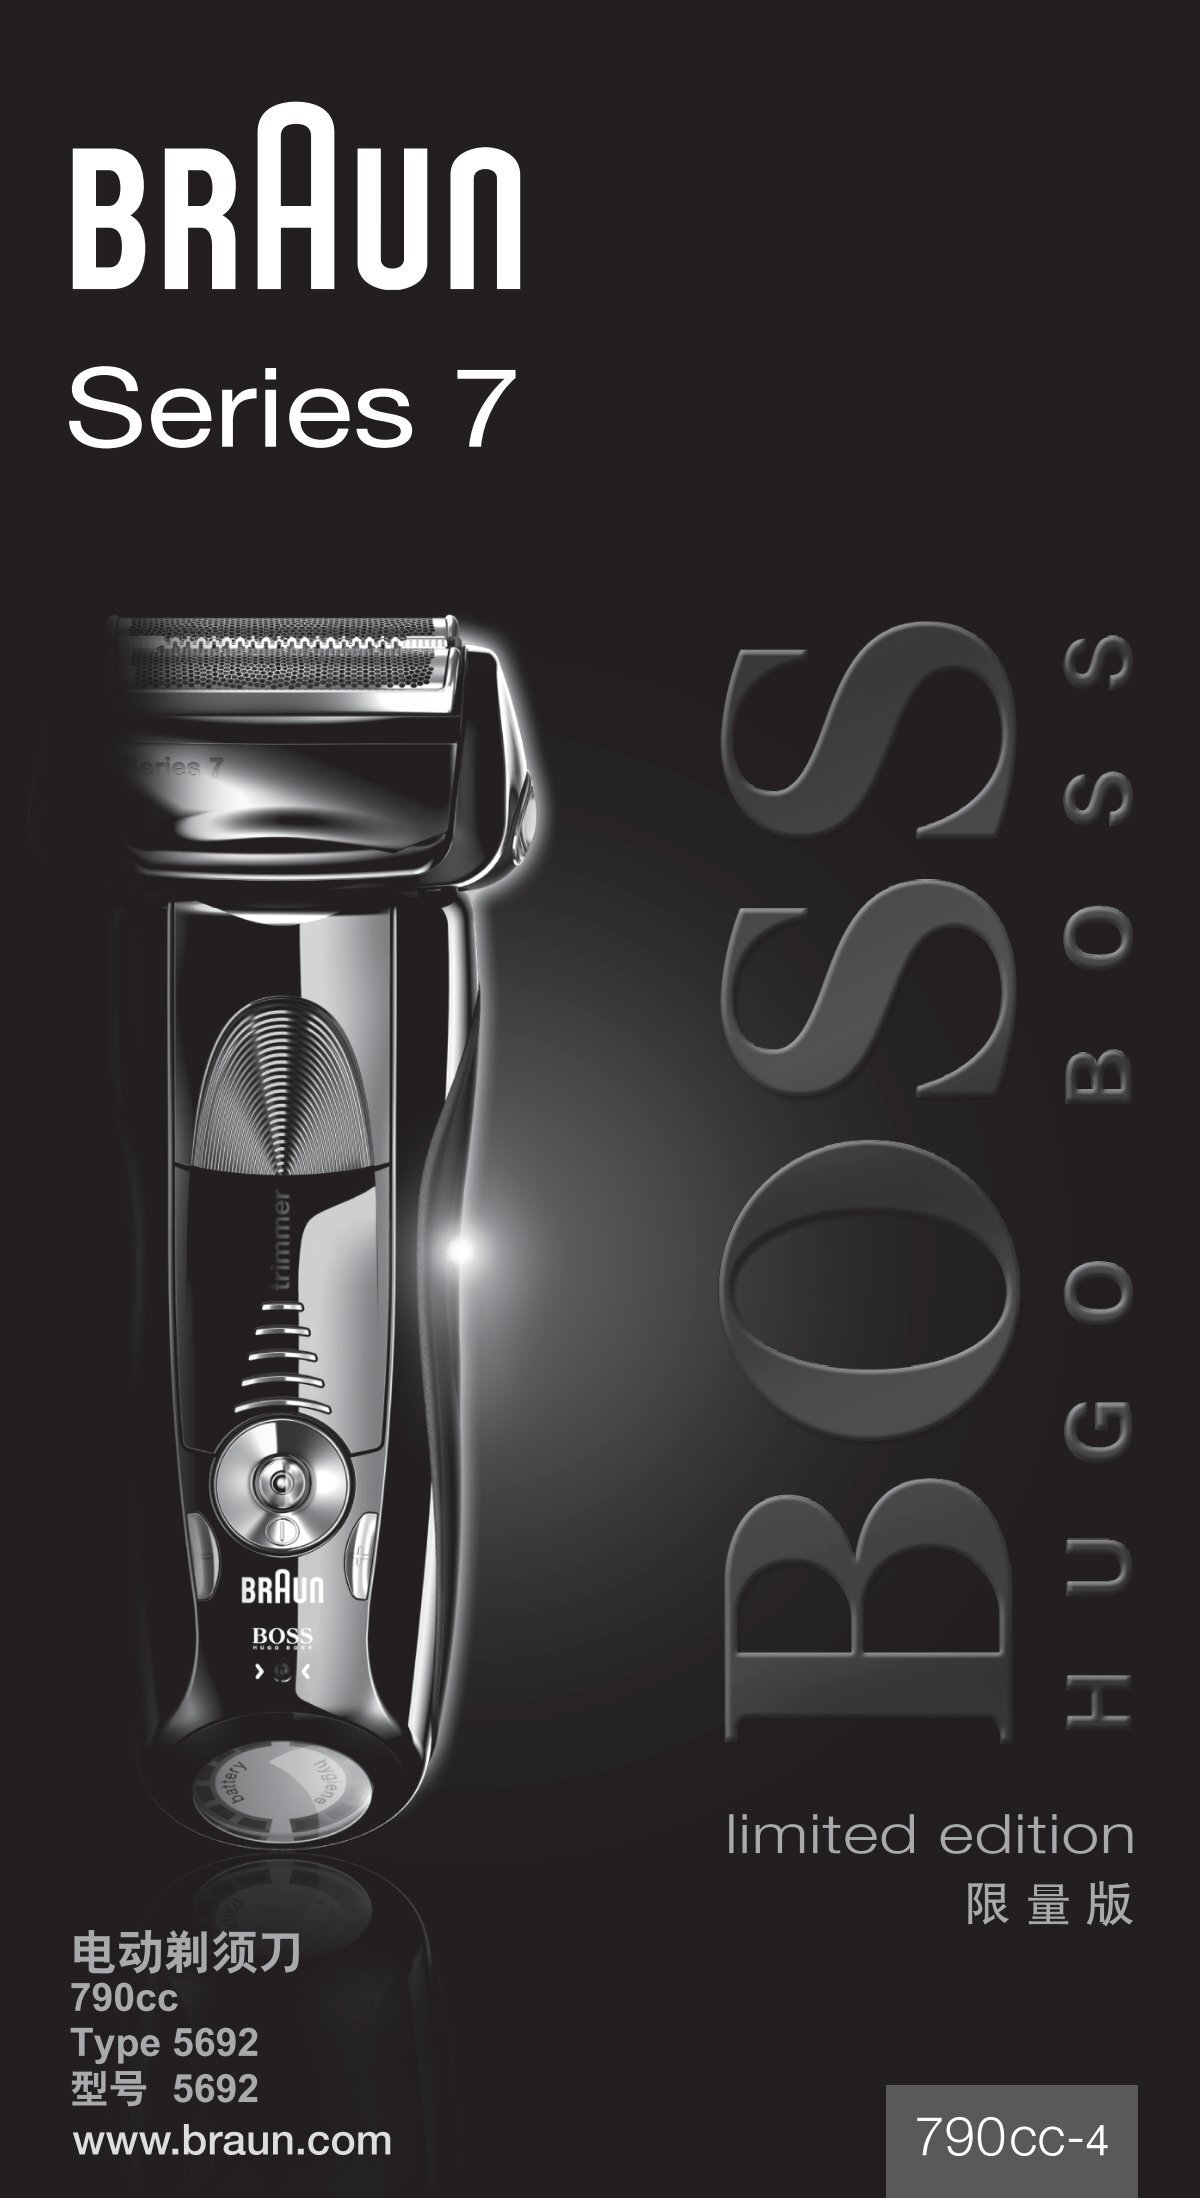 790cc-4, Series 7, limited edition, Hugo Boss - Braun Consumer